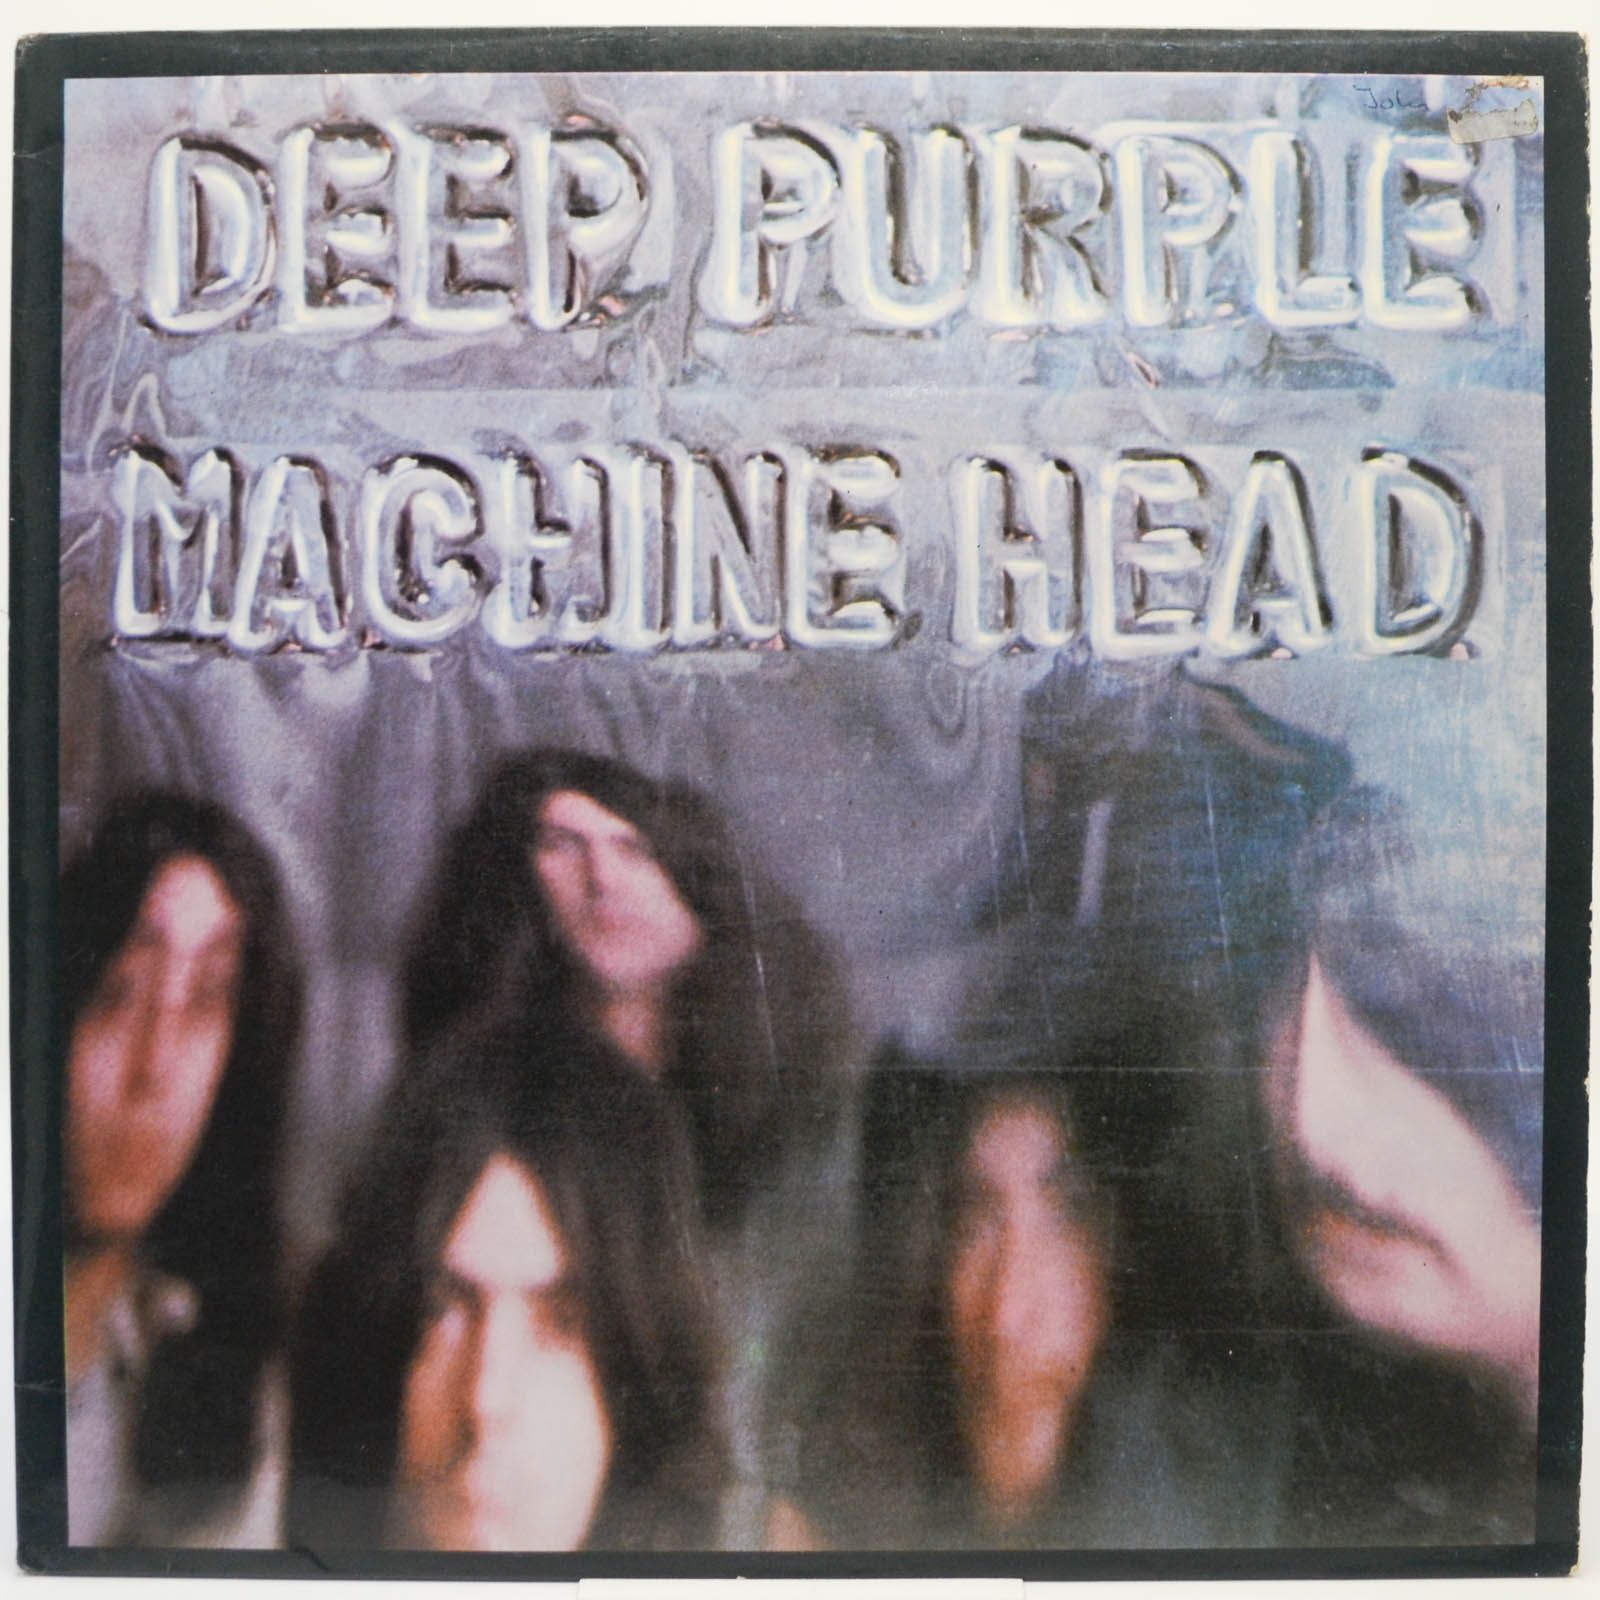 Deep Purple — Machine Head (poster), 1972